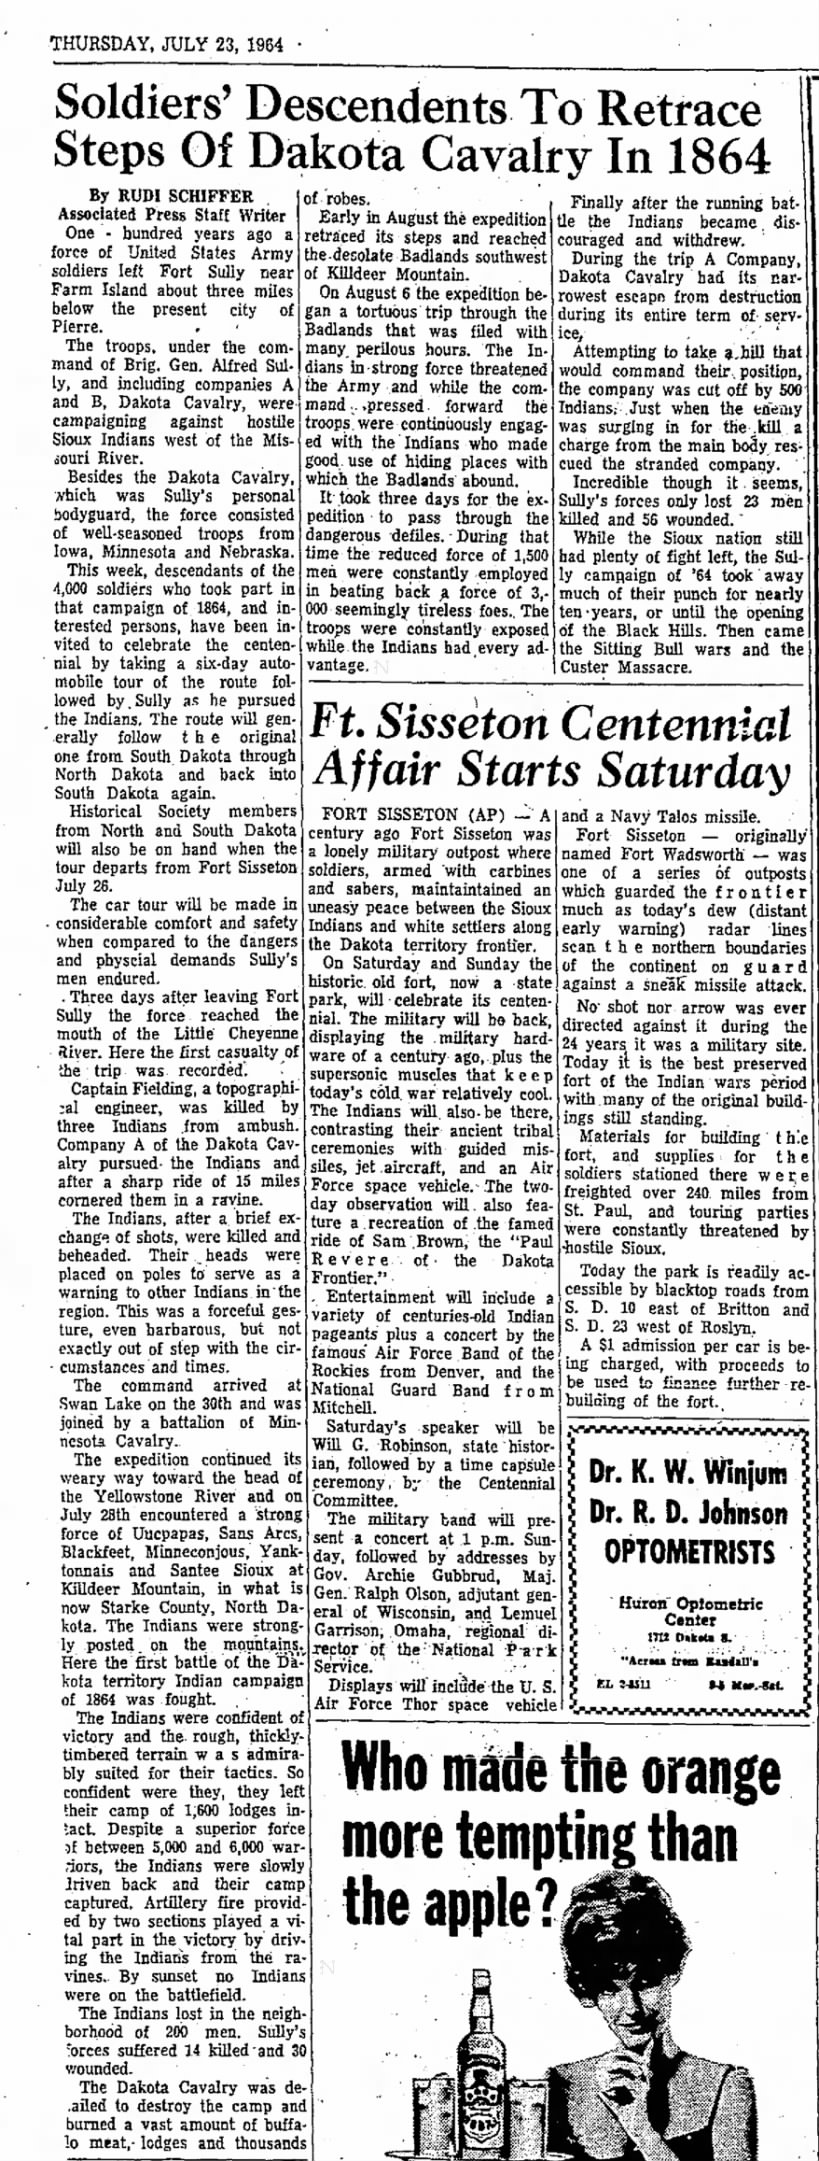 The Daily Plainsman (Huron, SD) 23 July 1964